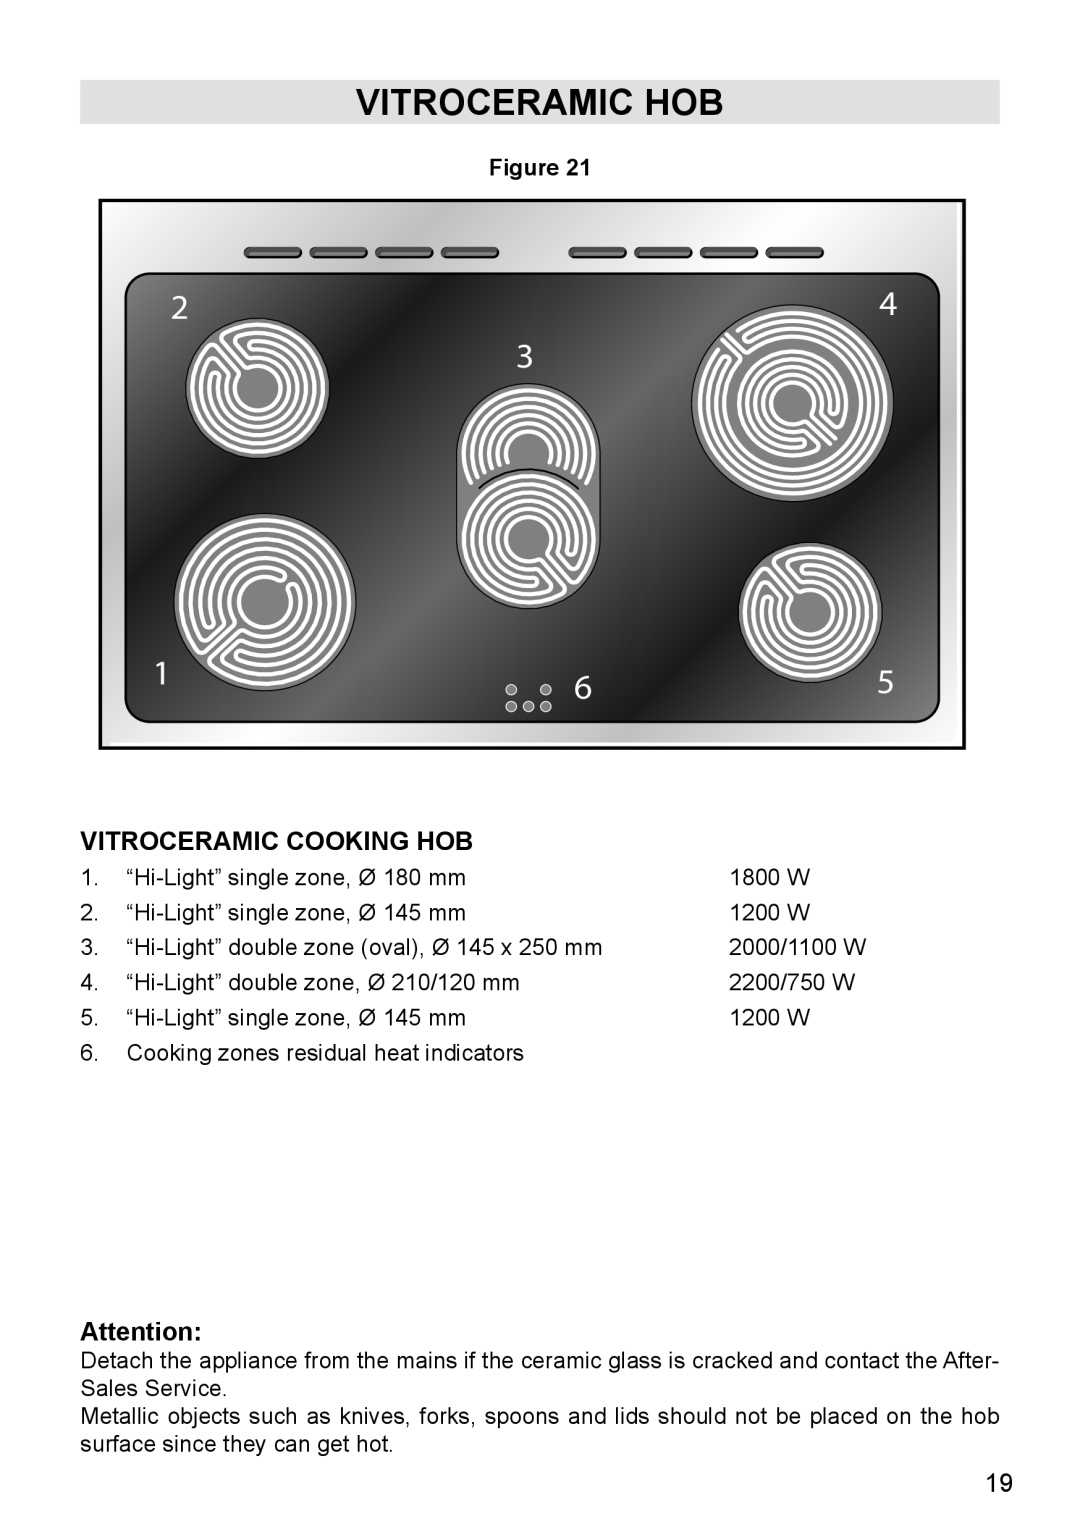 DeLonghi DEF905E manual Vitroceramic Hob, Vitroceramic Cooking Hob 